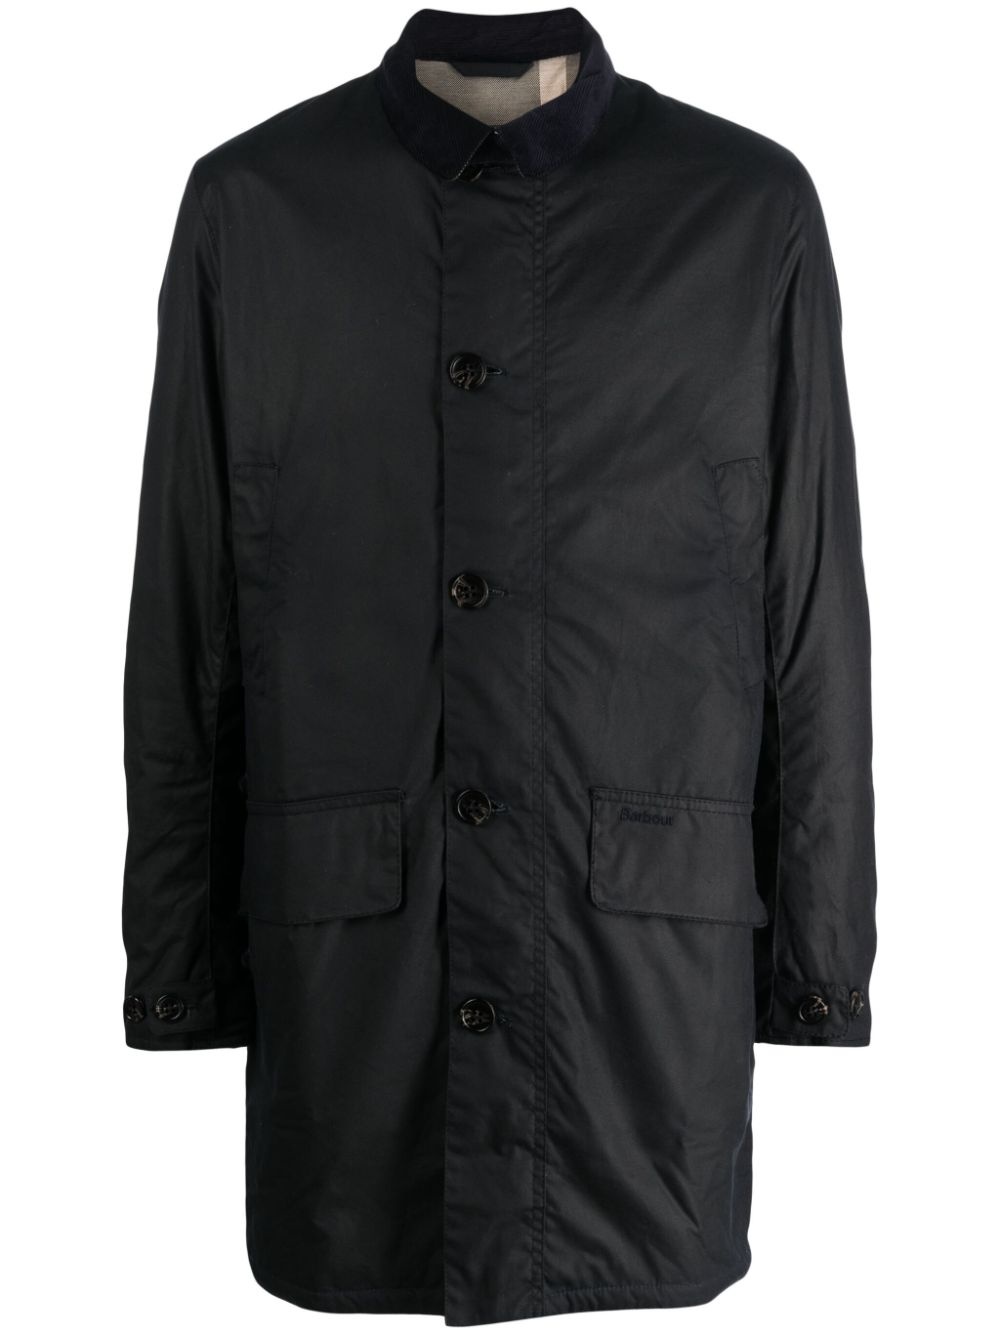 Mac waterproof raincoat - 1